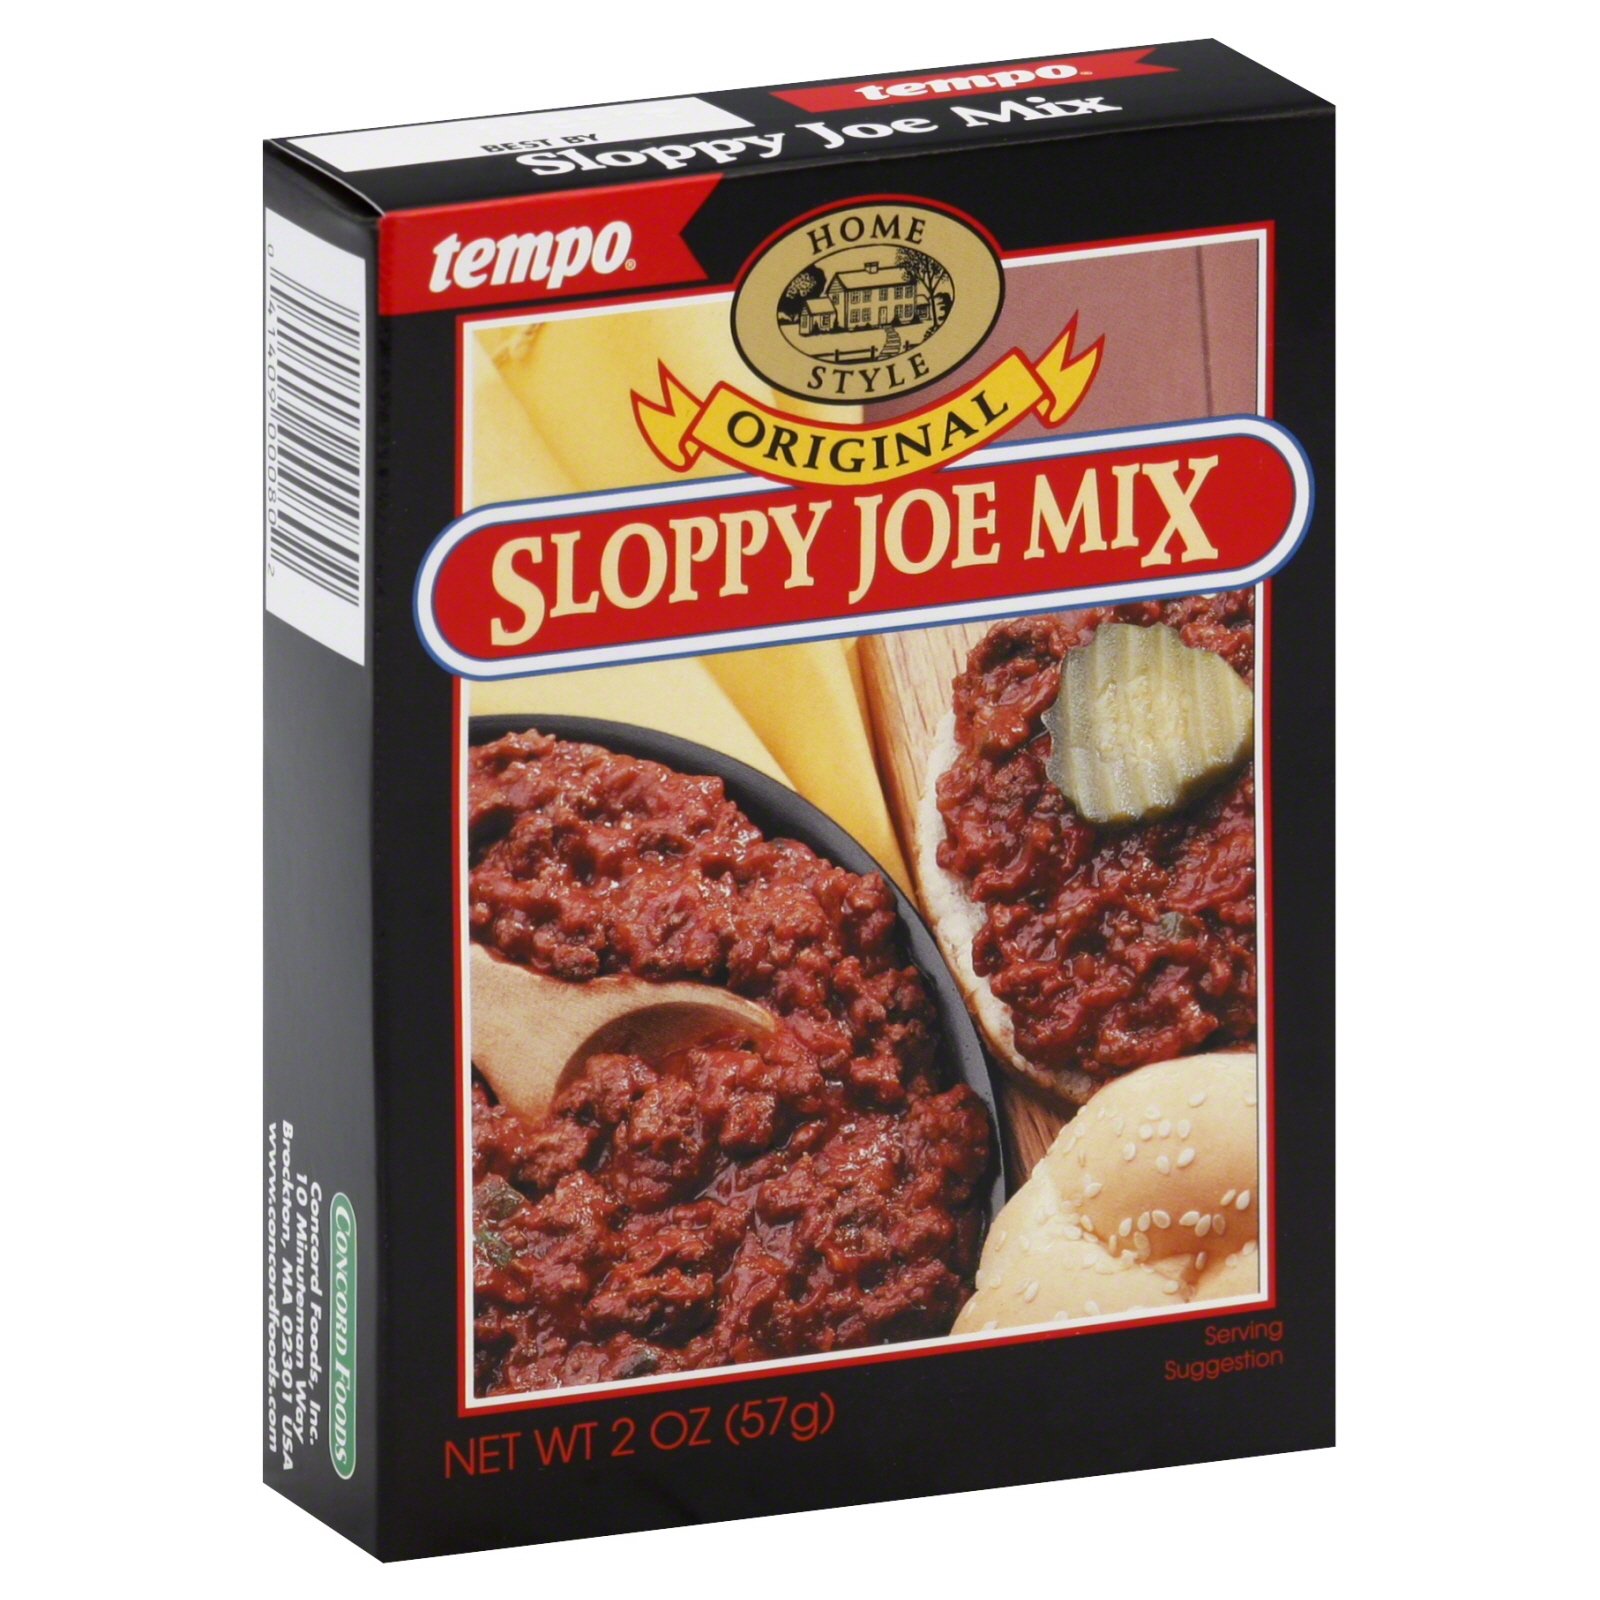 Tempo Home Style Sloppy Joe Mix, Original, 2 oz (57 g)